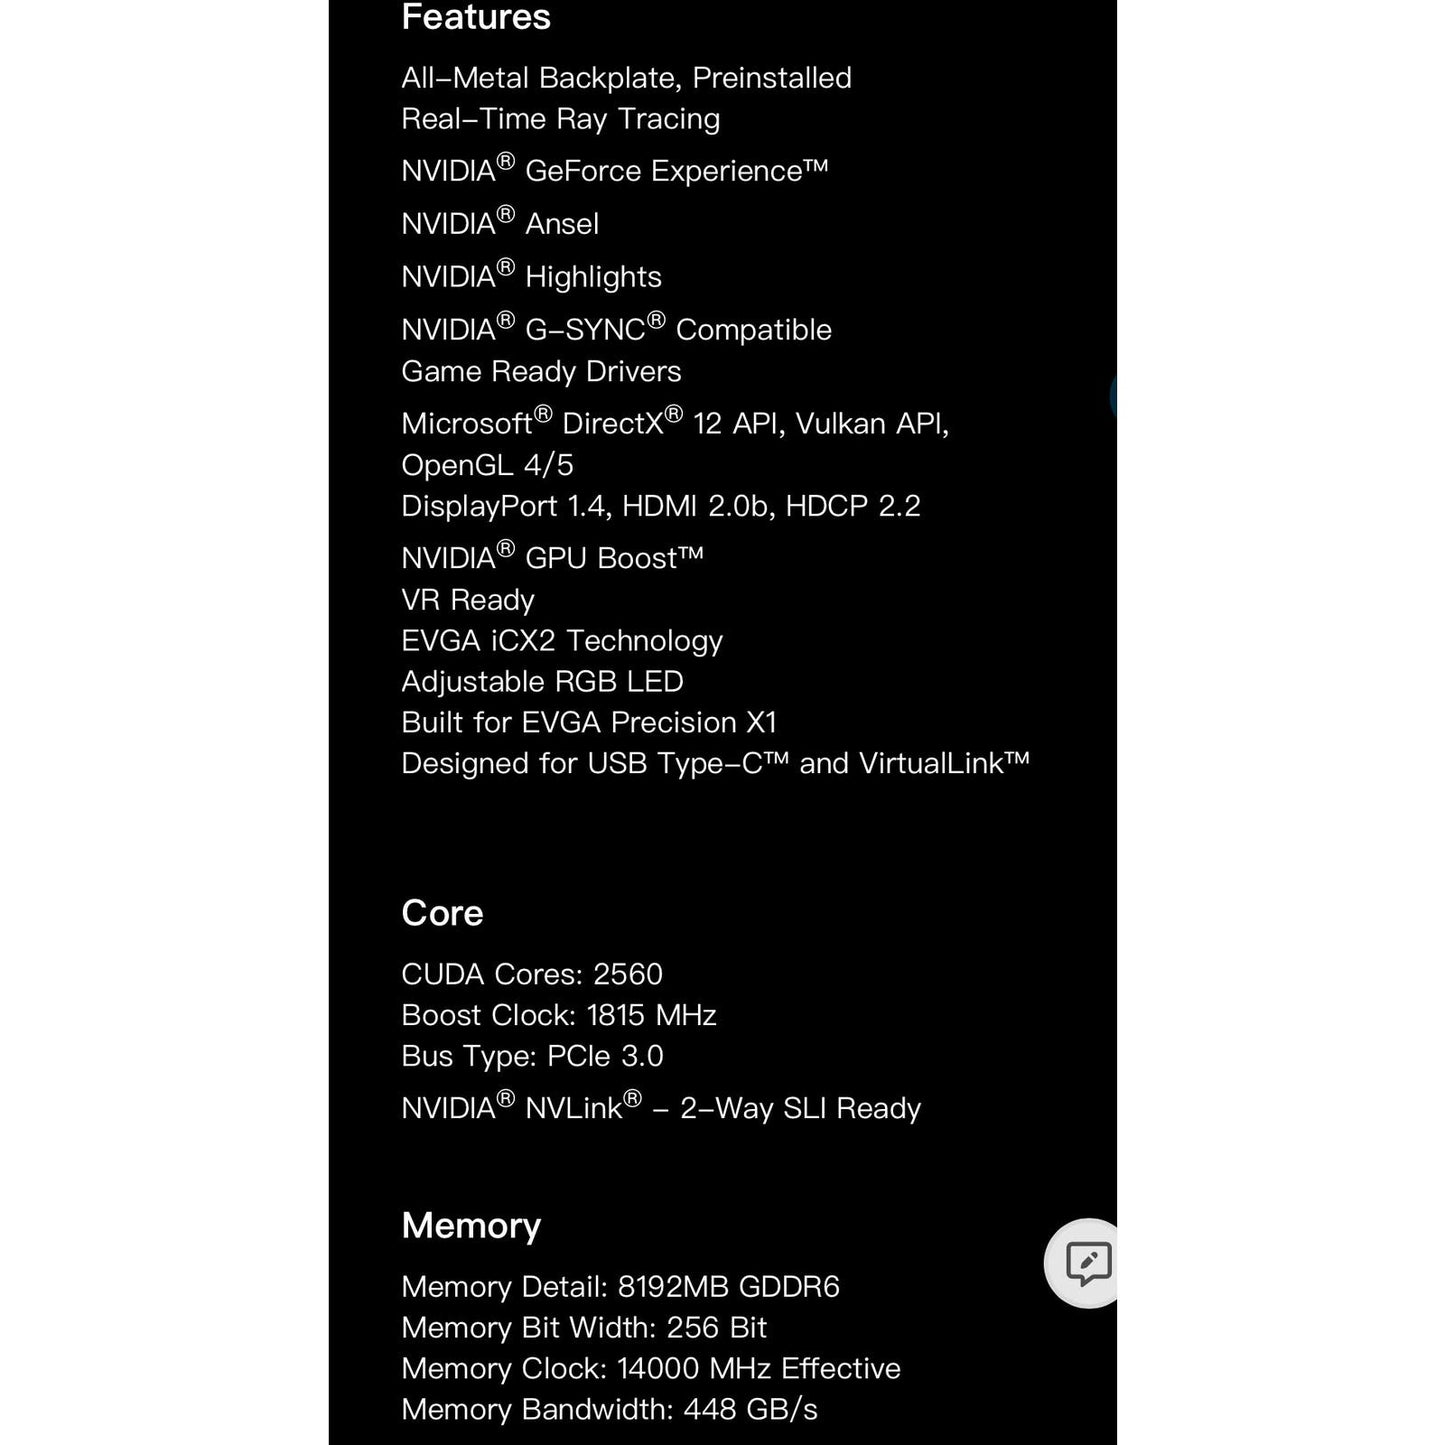 EVGA GeForce RTX 2070 Super FTW3 Ultra, Overclocked, Triple + iCX2, 65C Gaming, RGB, Video Card